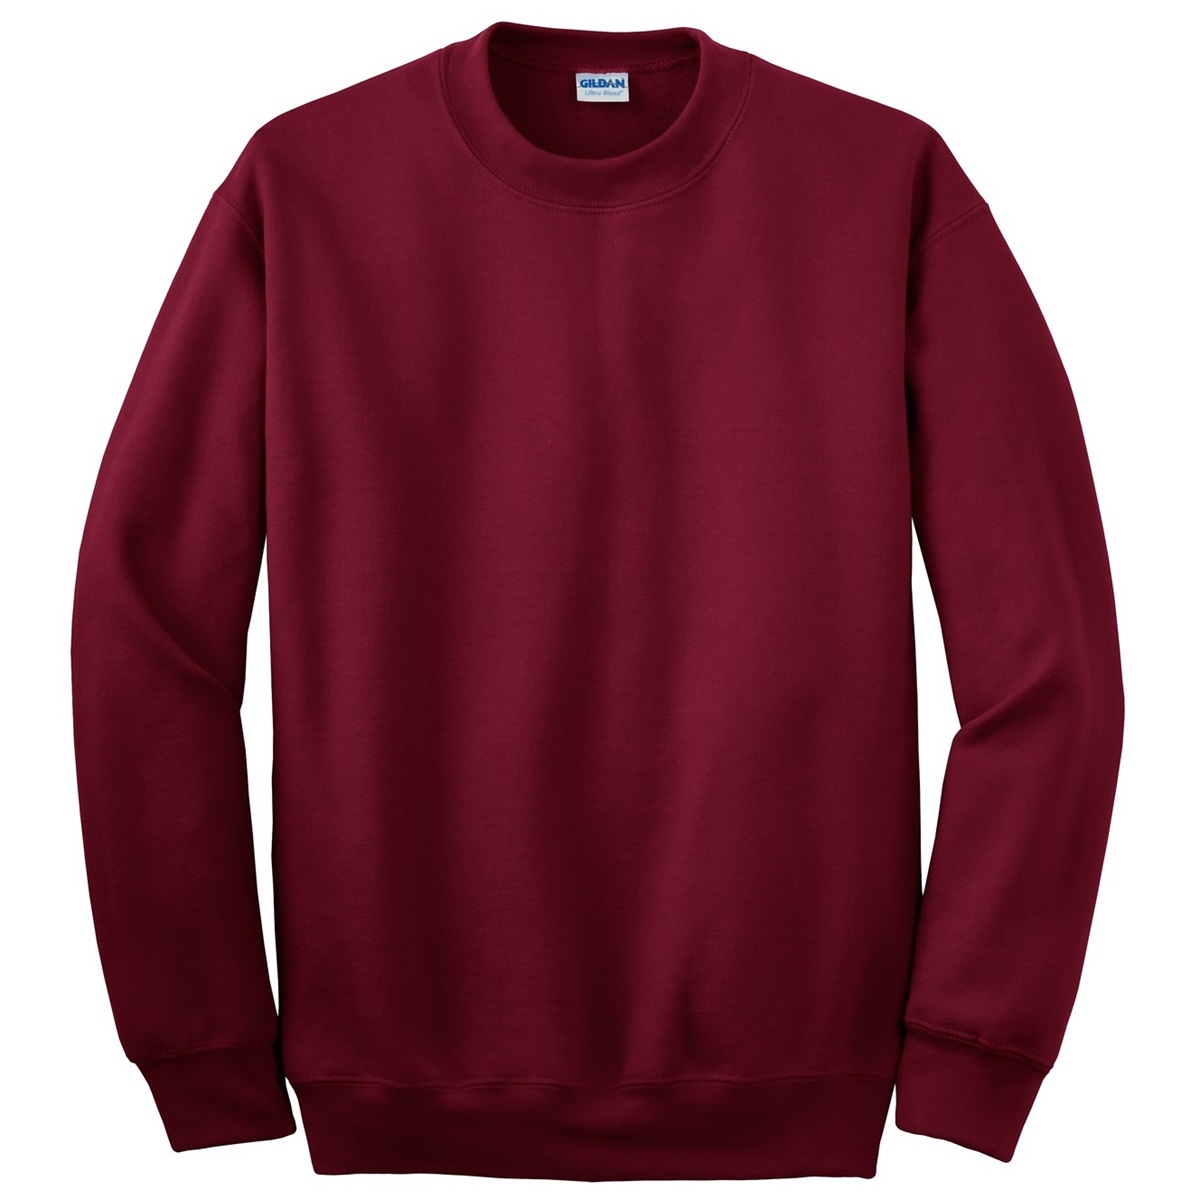 Gildan 12000 DryBlend Crewneck Sweatshirt - Cardinal Red | FullSource.com